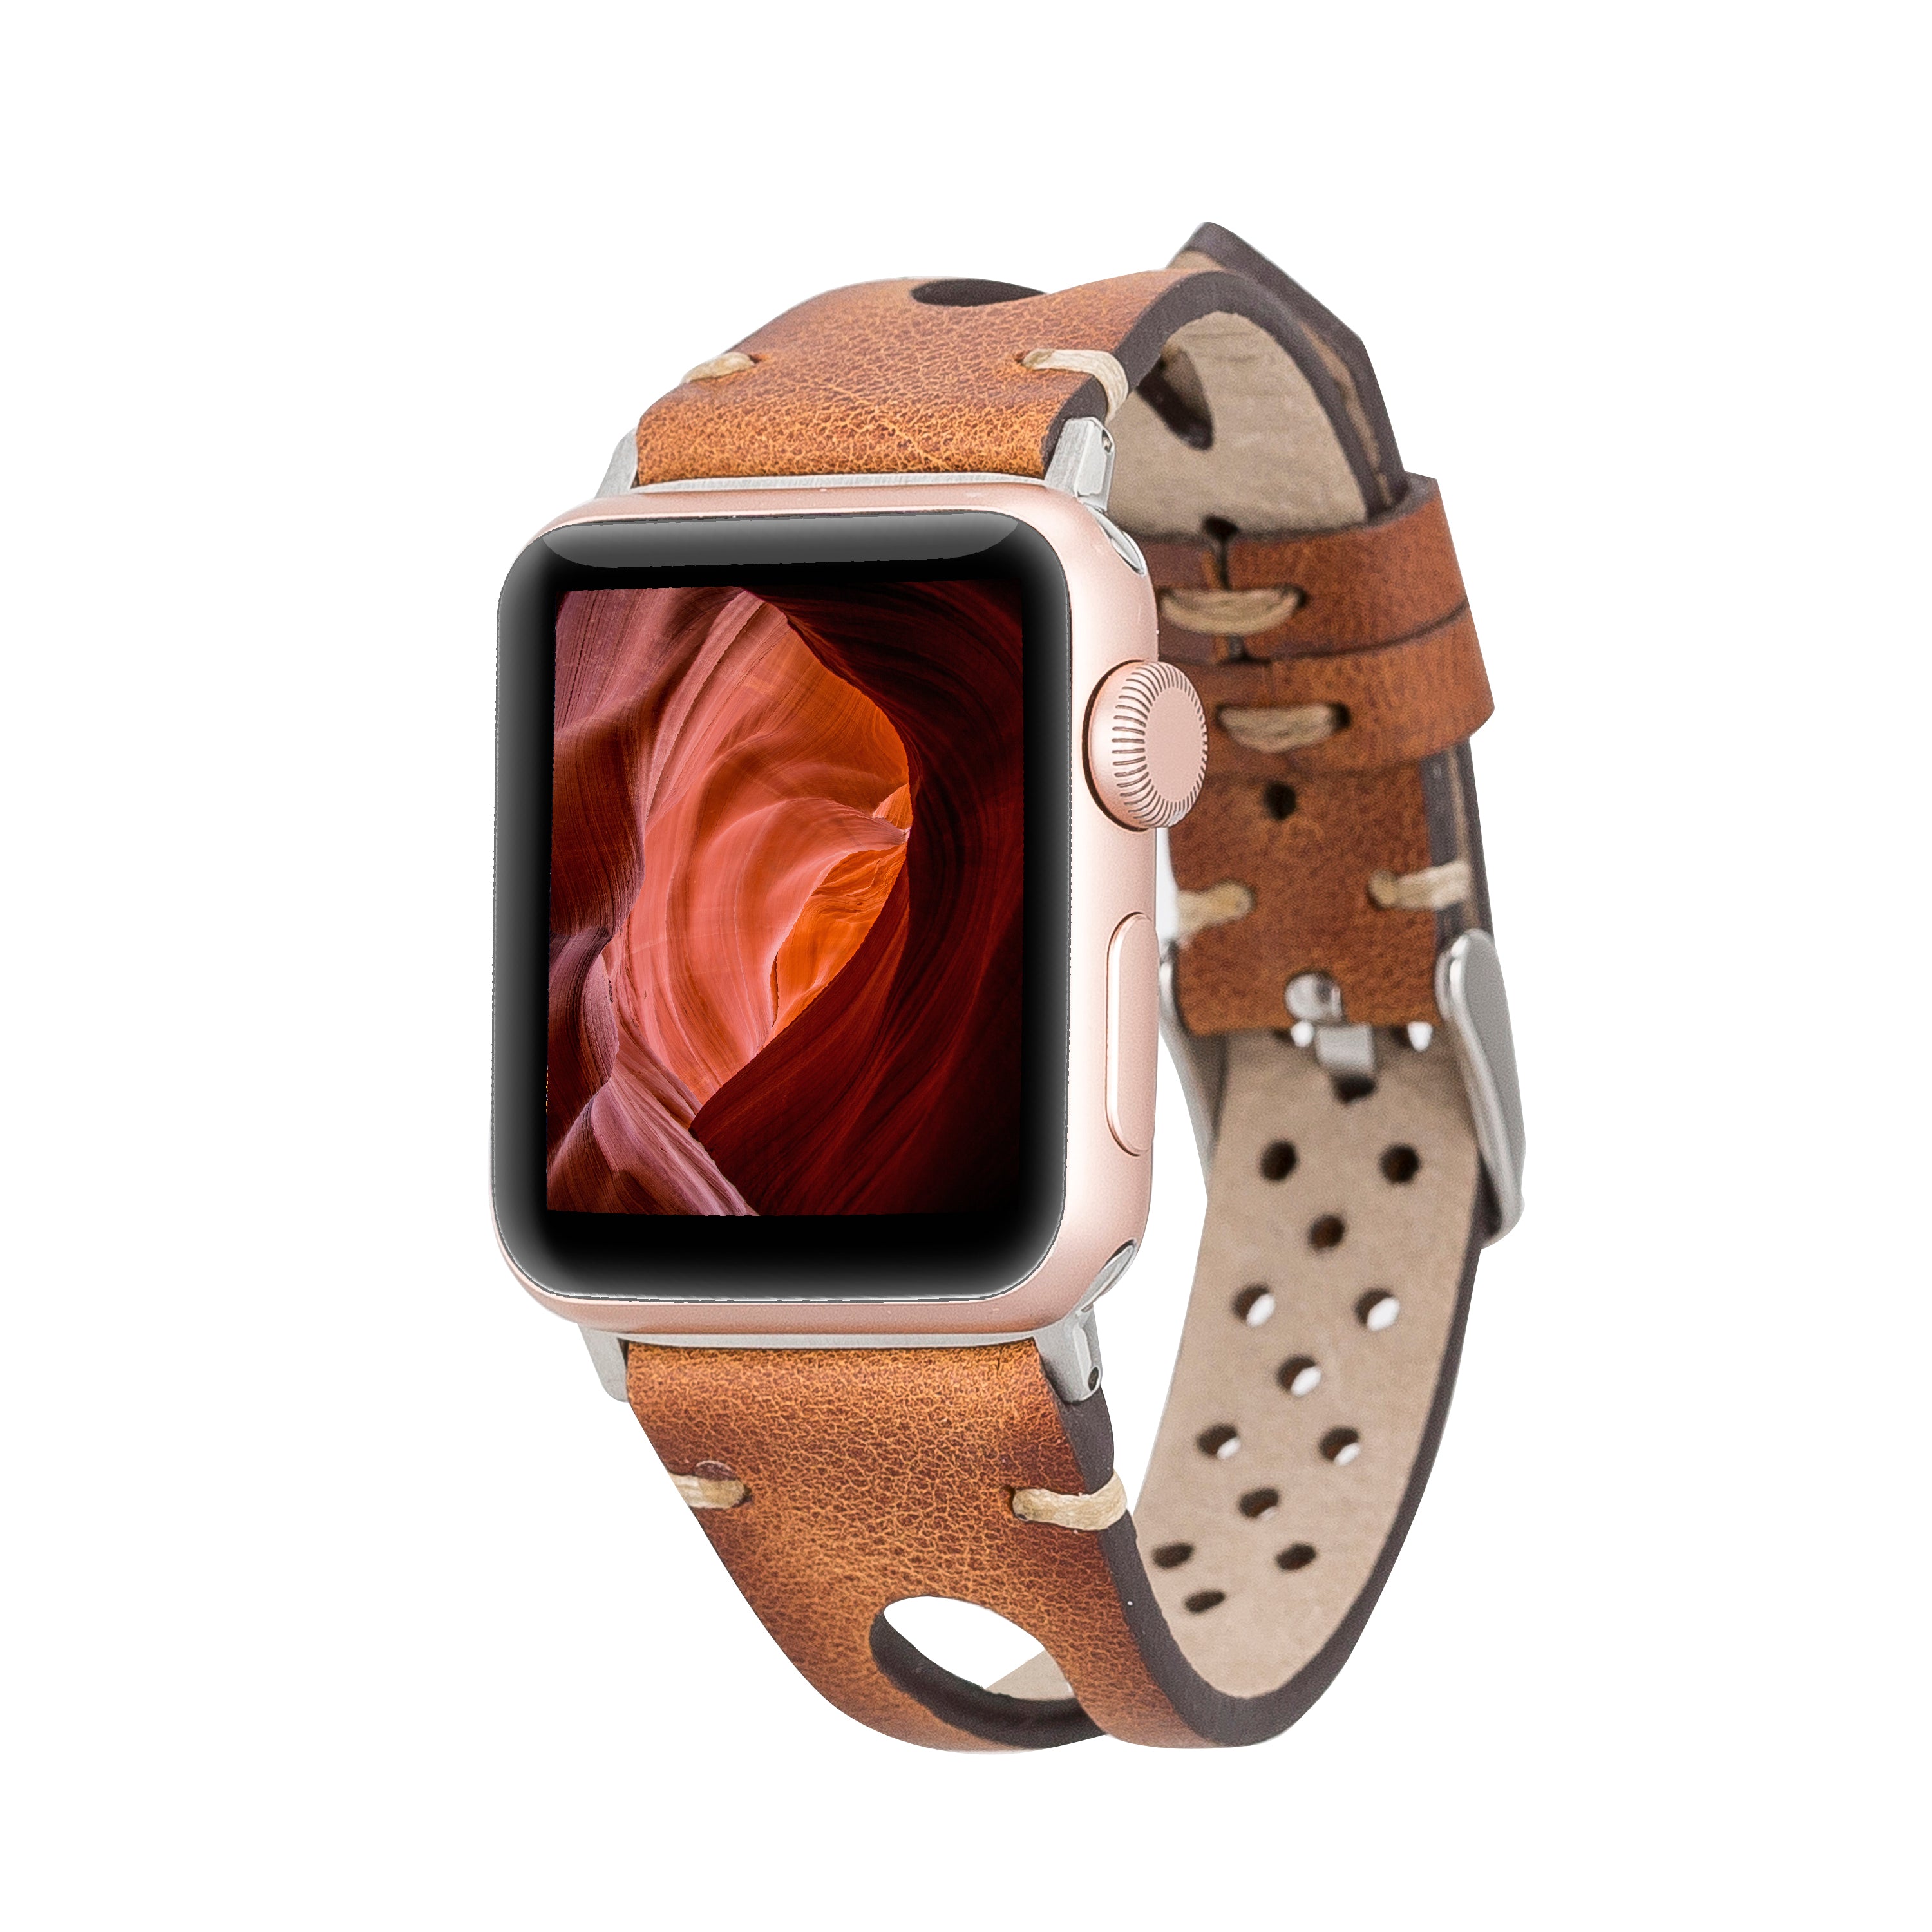 DelfiCase Quinn Watch Band for Apple Watch & Fitbit Versa/Sense (Brown) 1